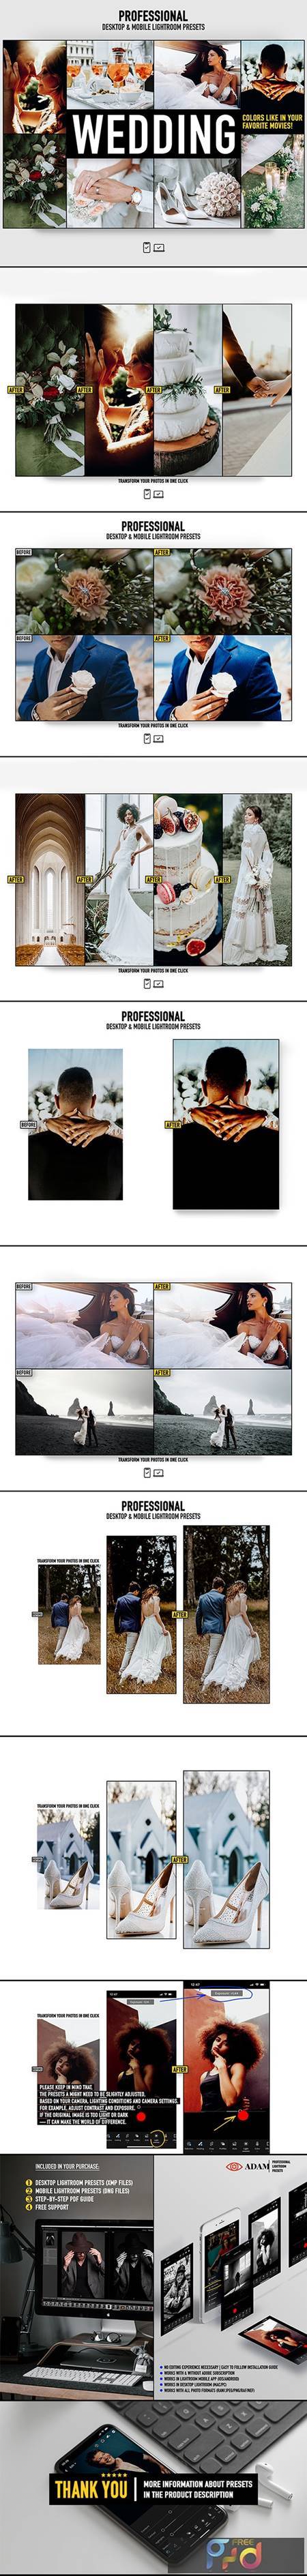 Wedding Lightroom Presets - Portraits Photography Actions 28283657 1